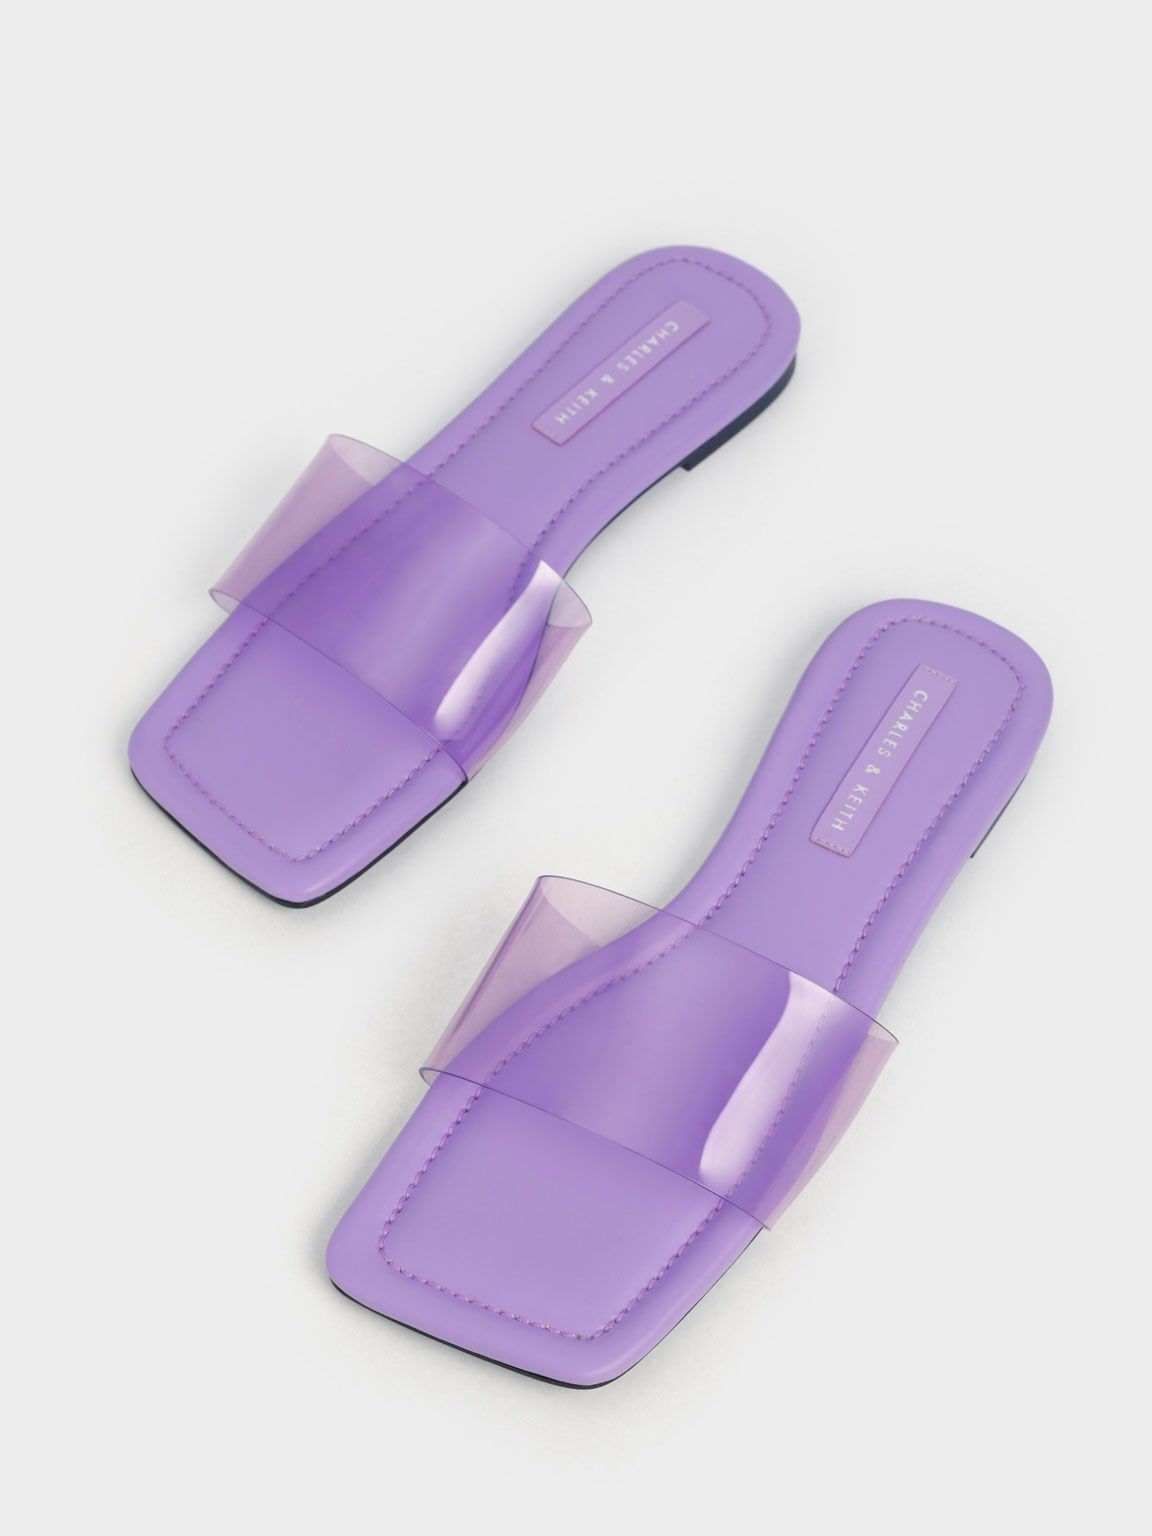 Sandal Slide Padded, Purple, hi-res